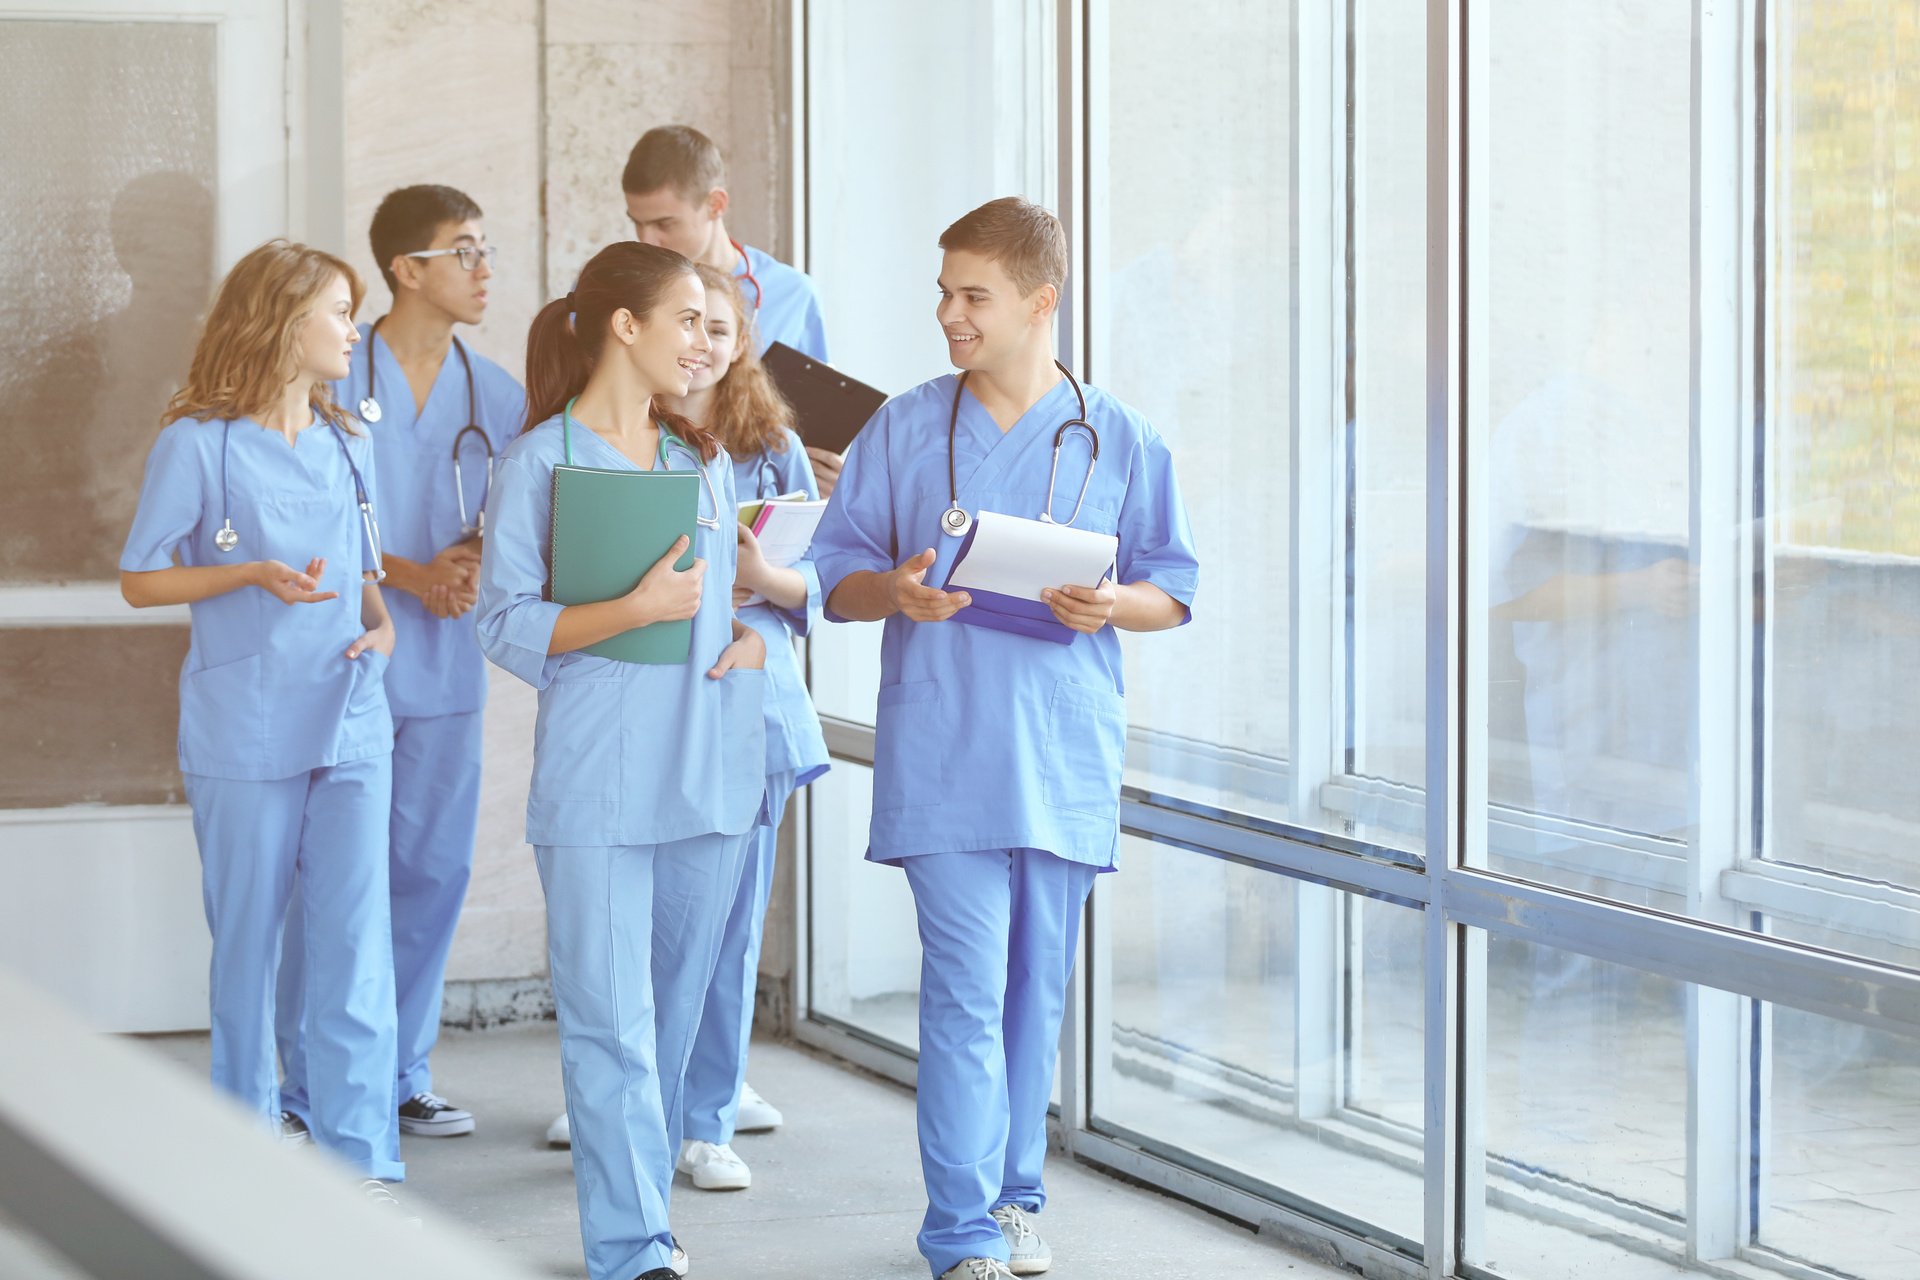 Group of medical professionals walking down hospital corridor